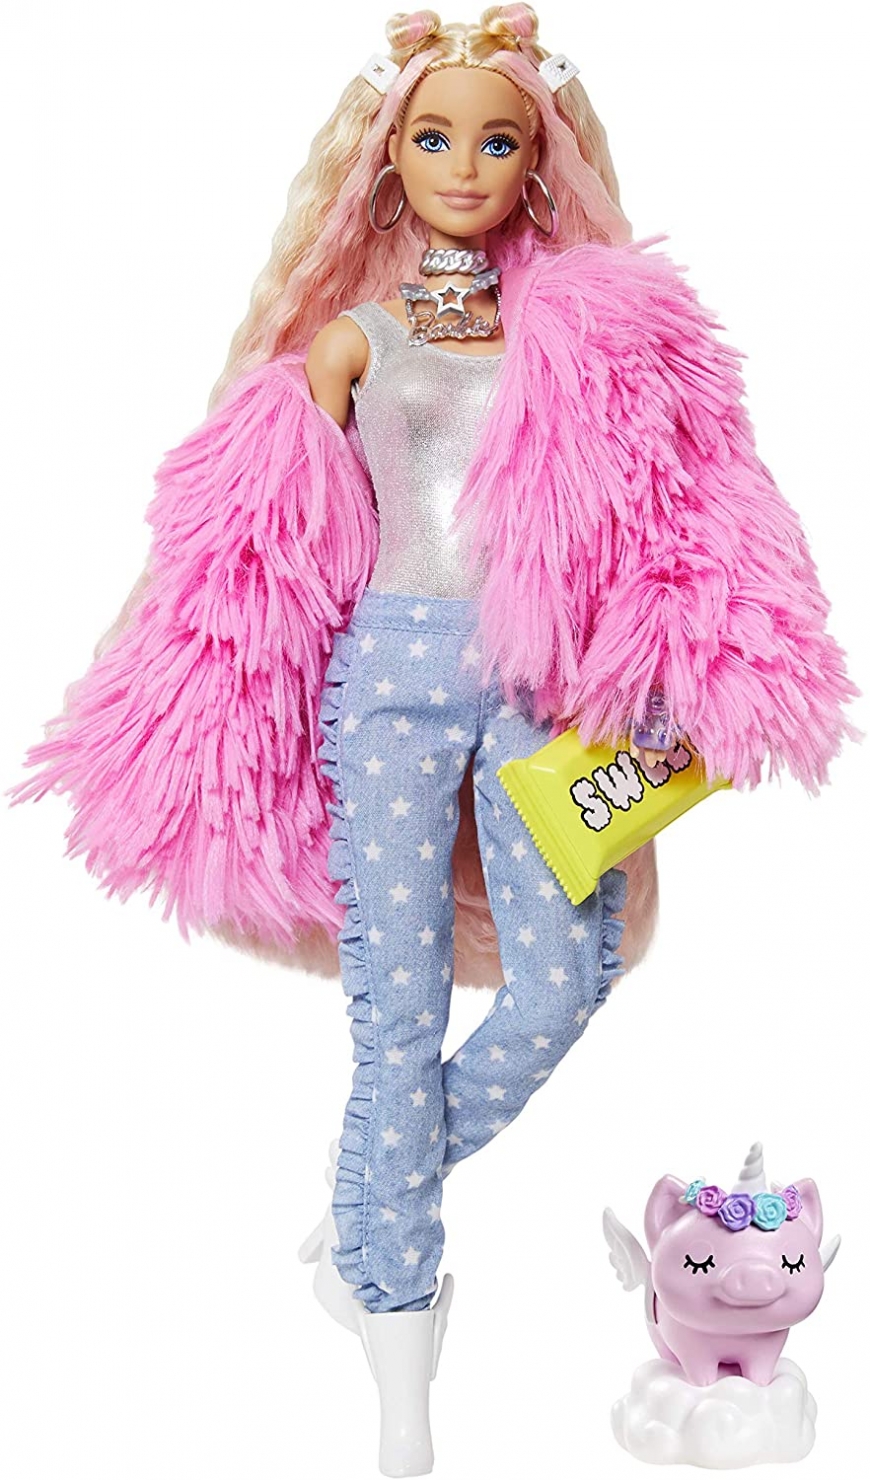 Barbie Extra blonde doll